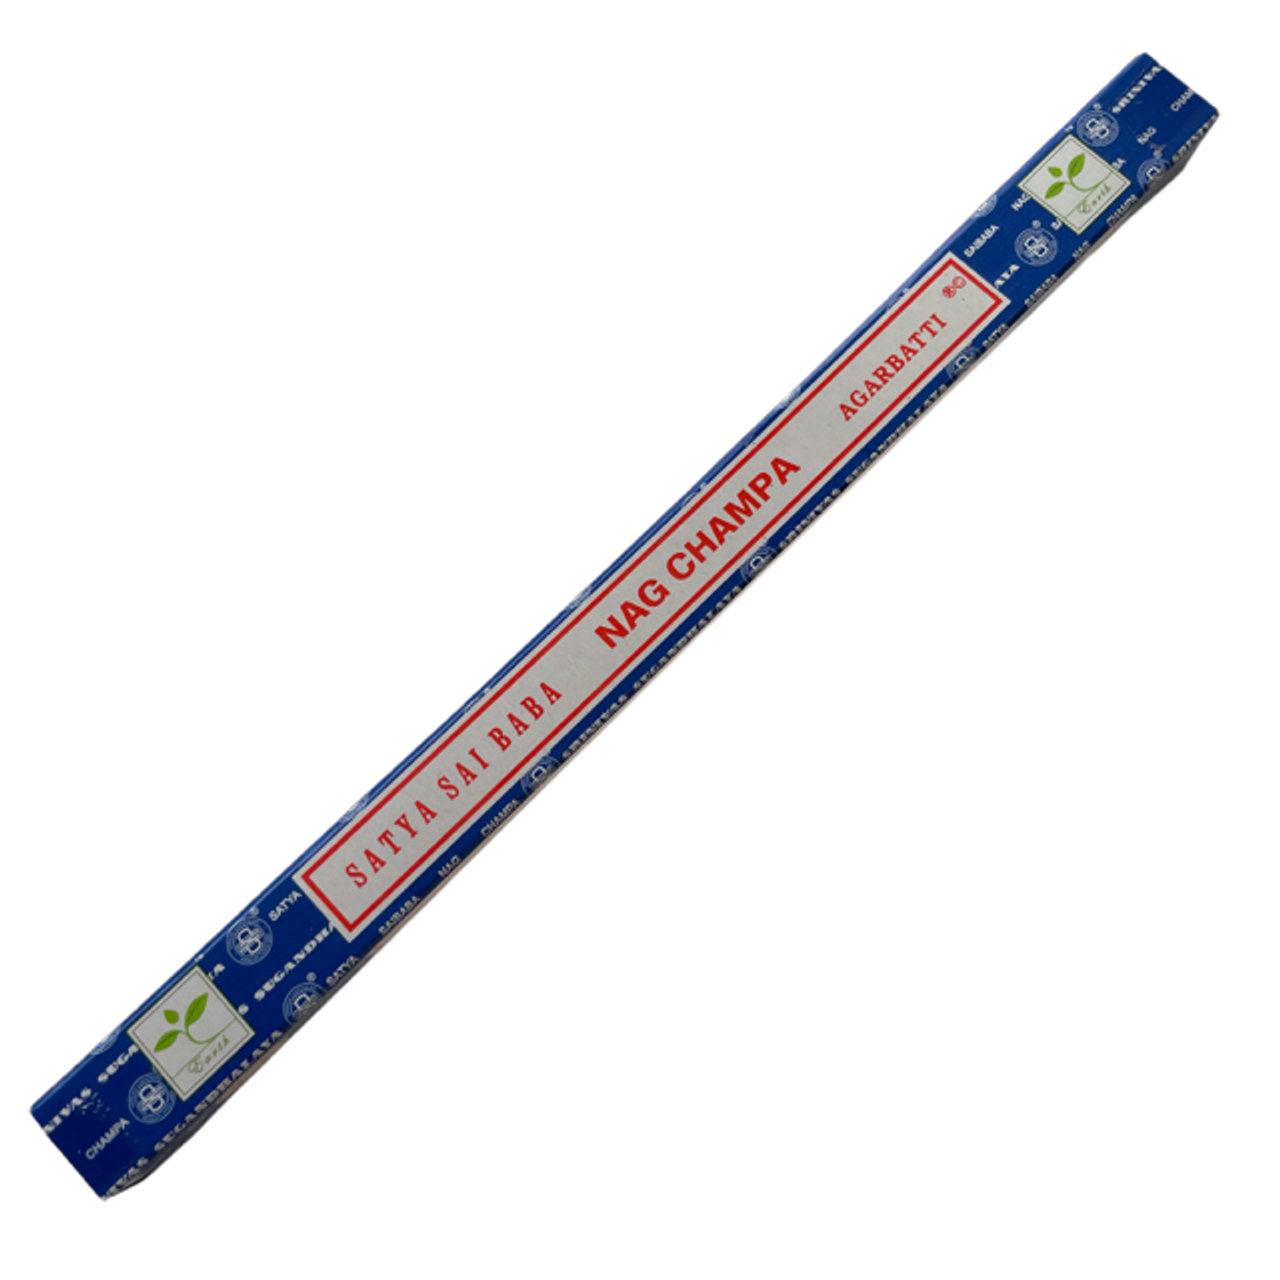 SATYA Nag Champa Incense Sticks, 10 gram box